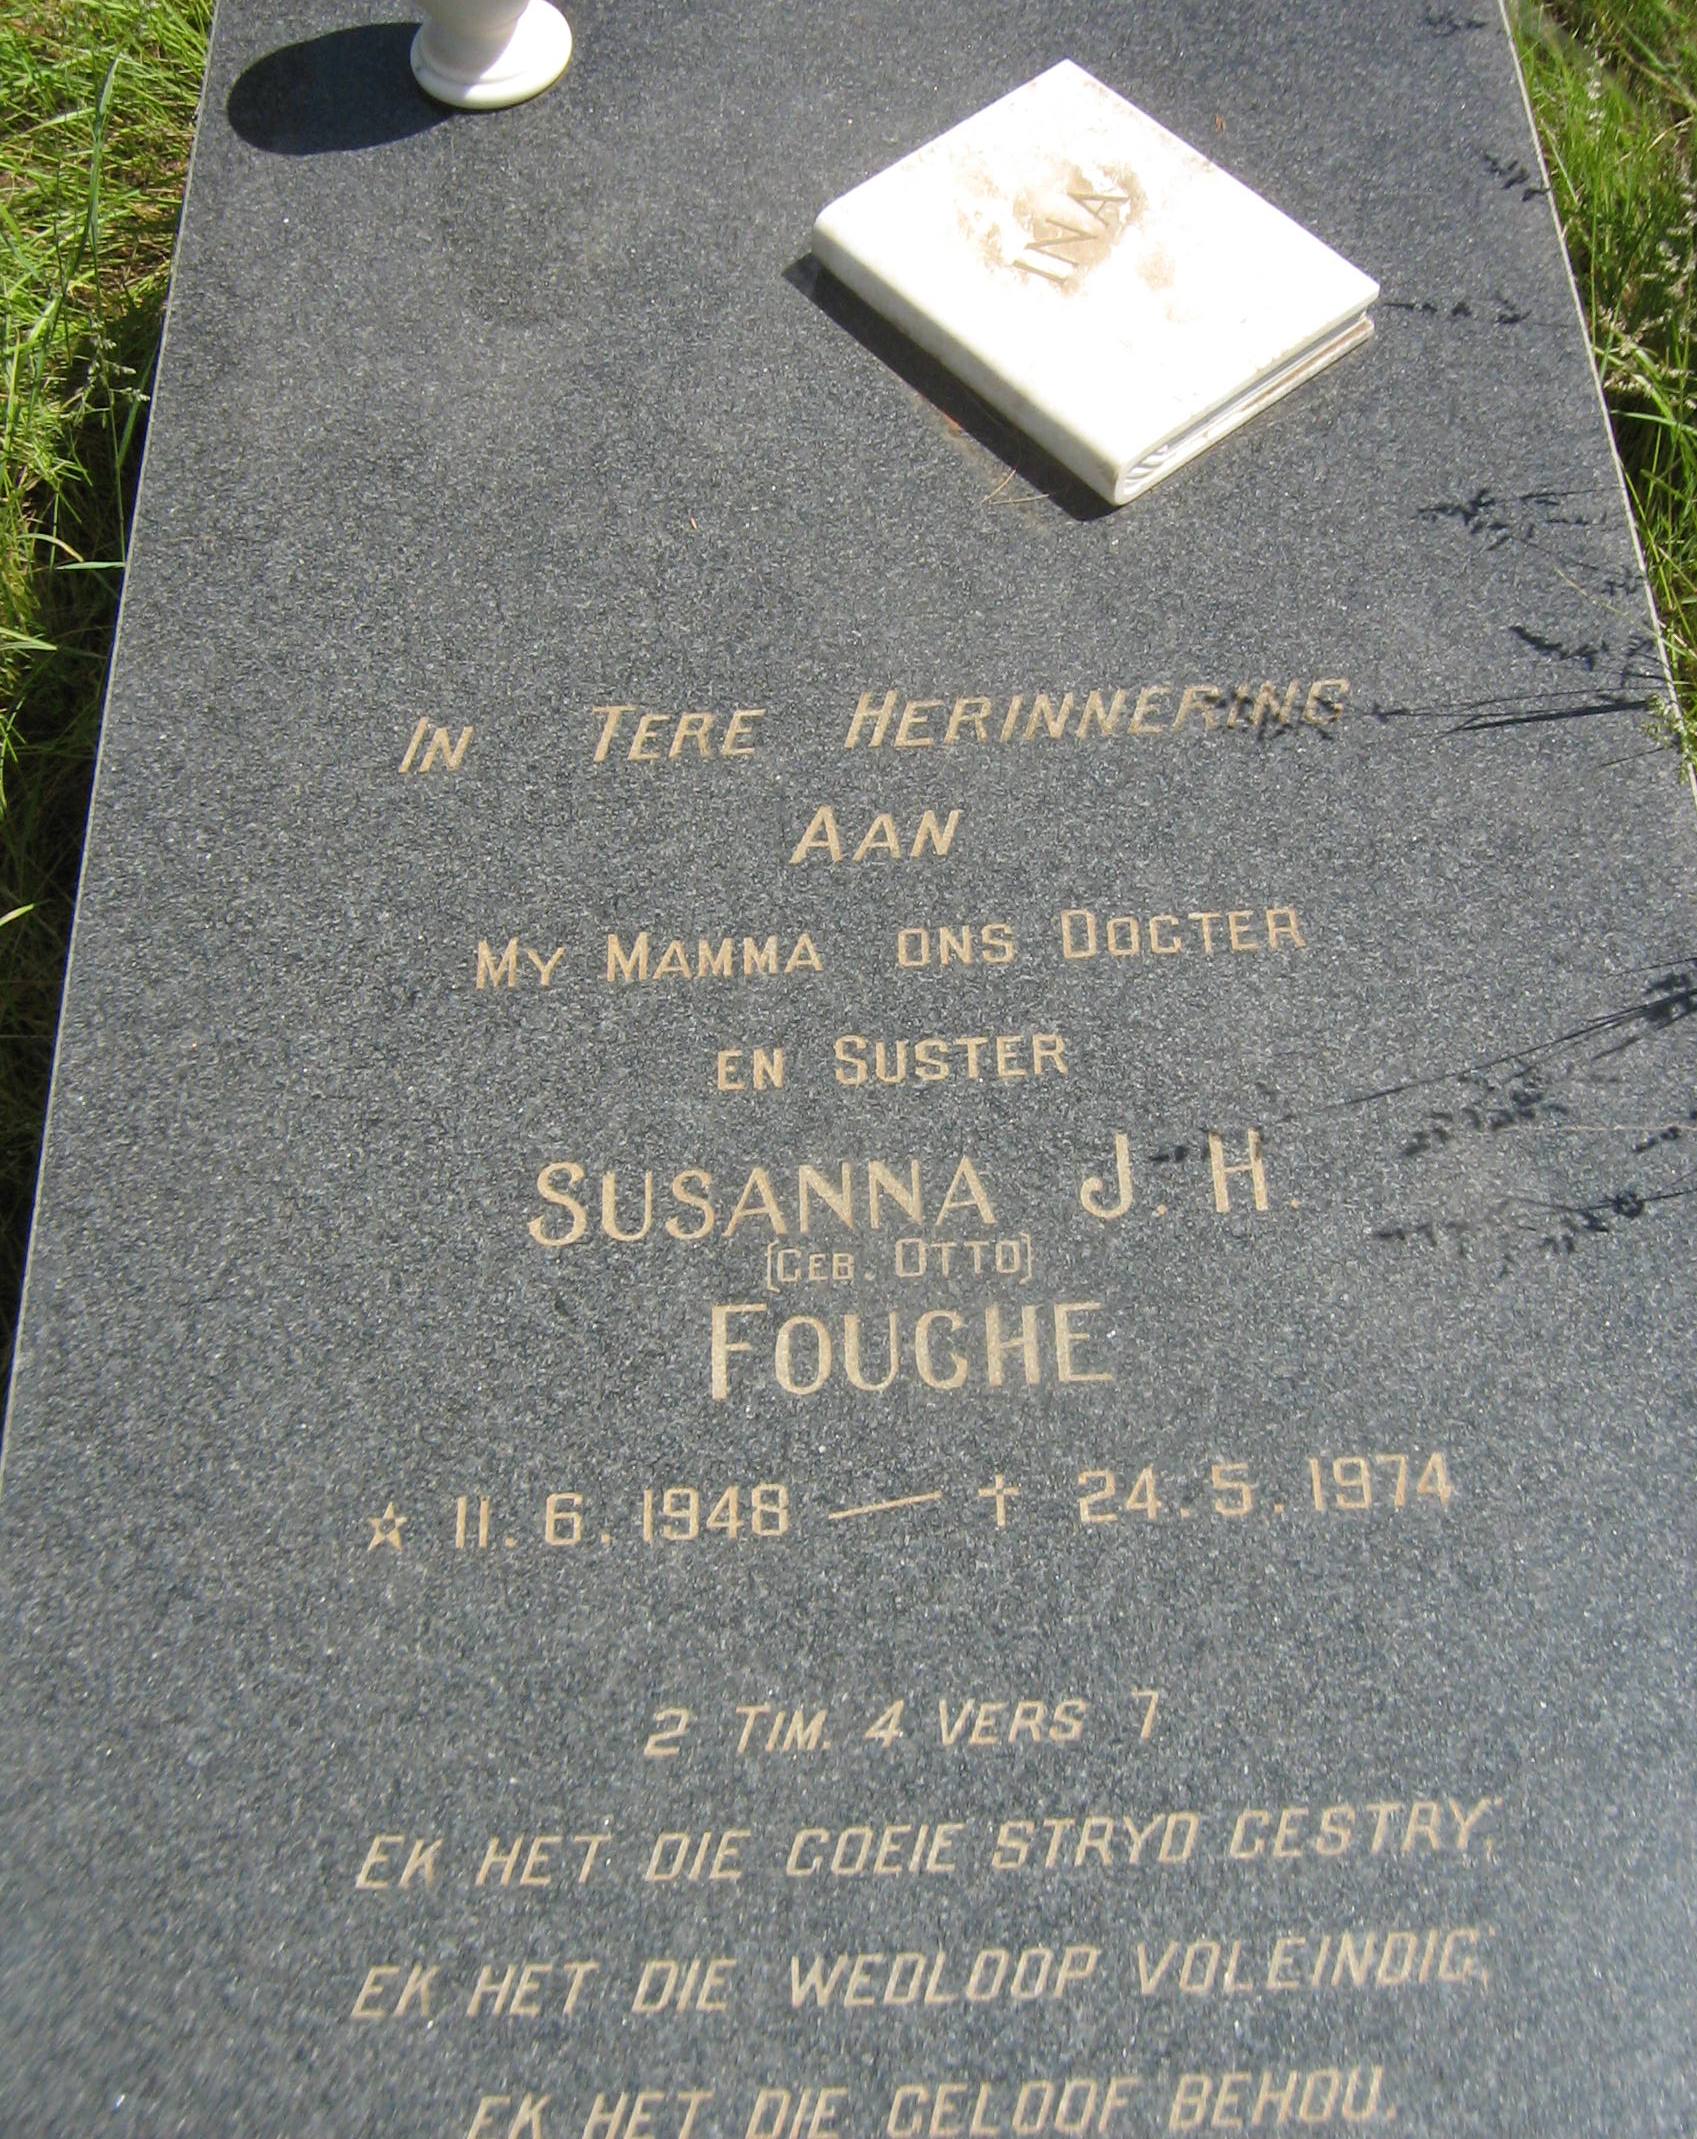 FOUCHE Susanna J.H. nee OTTO 1948-1974